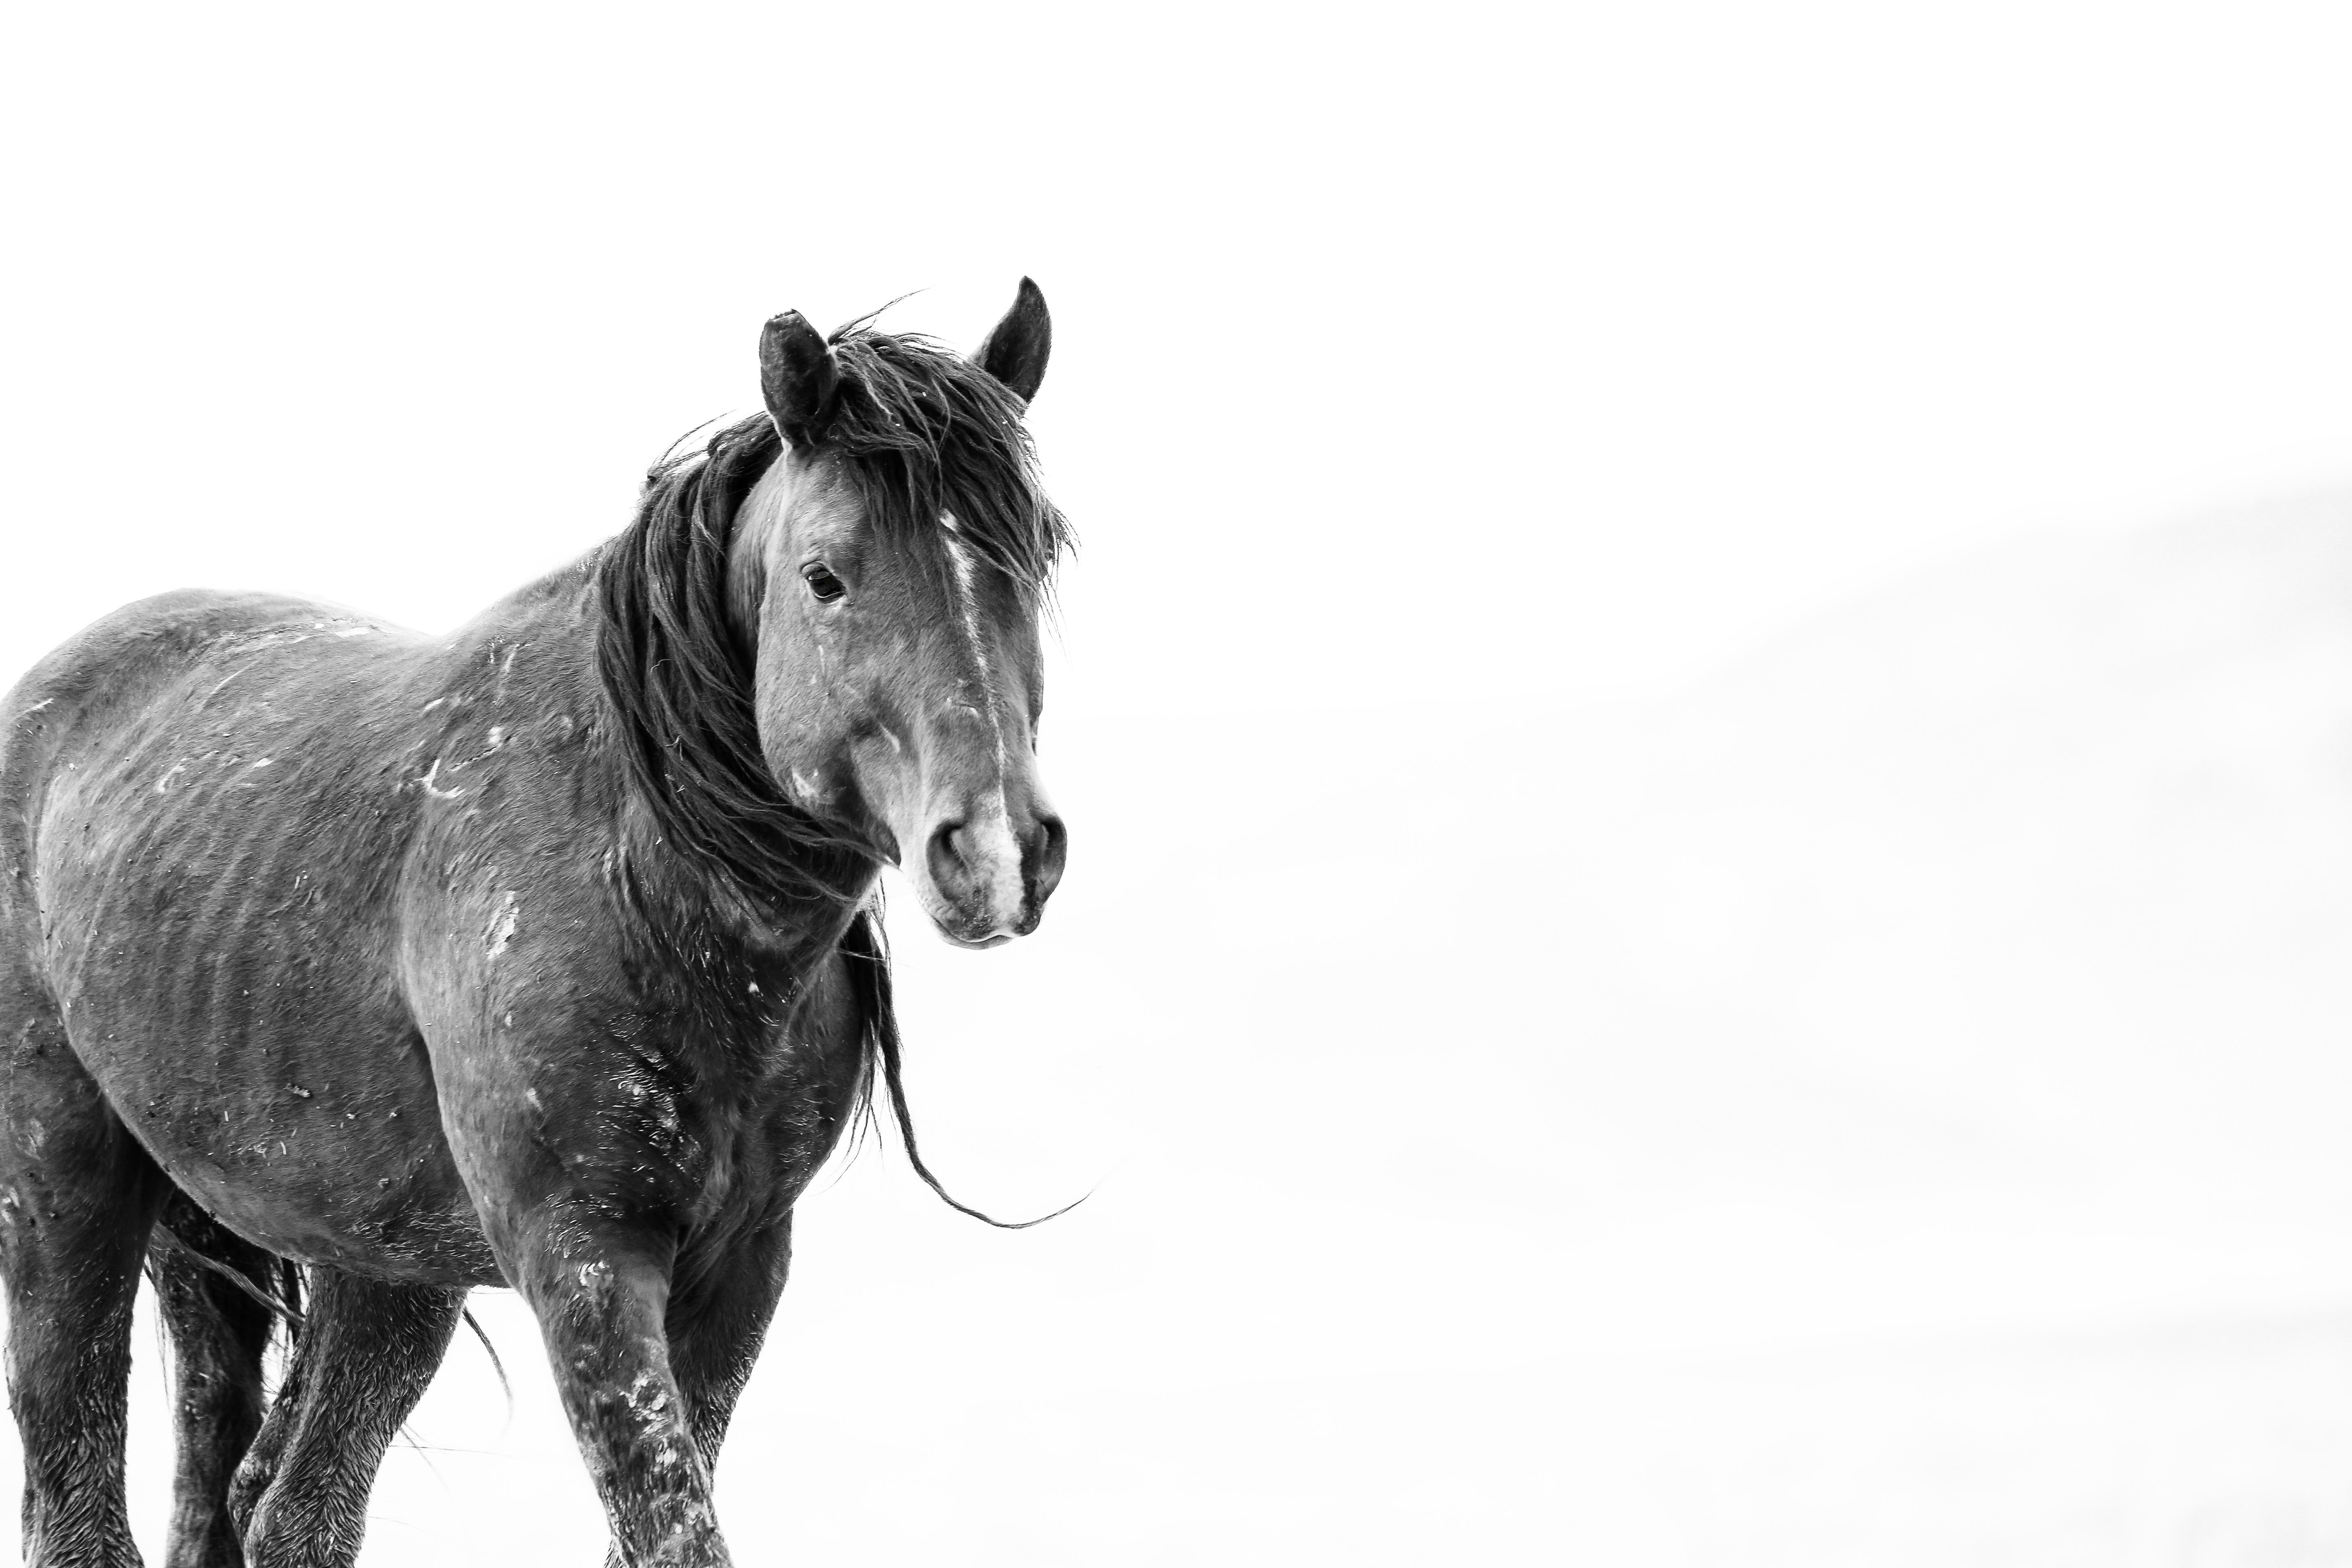 Black and White Photograph Shane Russeck - SOLO 40x60  Photographie noir et blanc « Wild Horses Mustang » (Femmes sauvages mourants), non signée